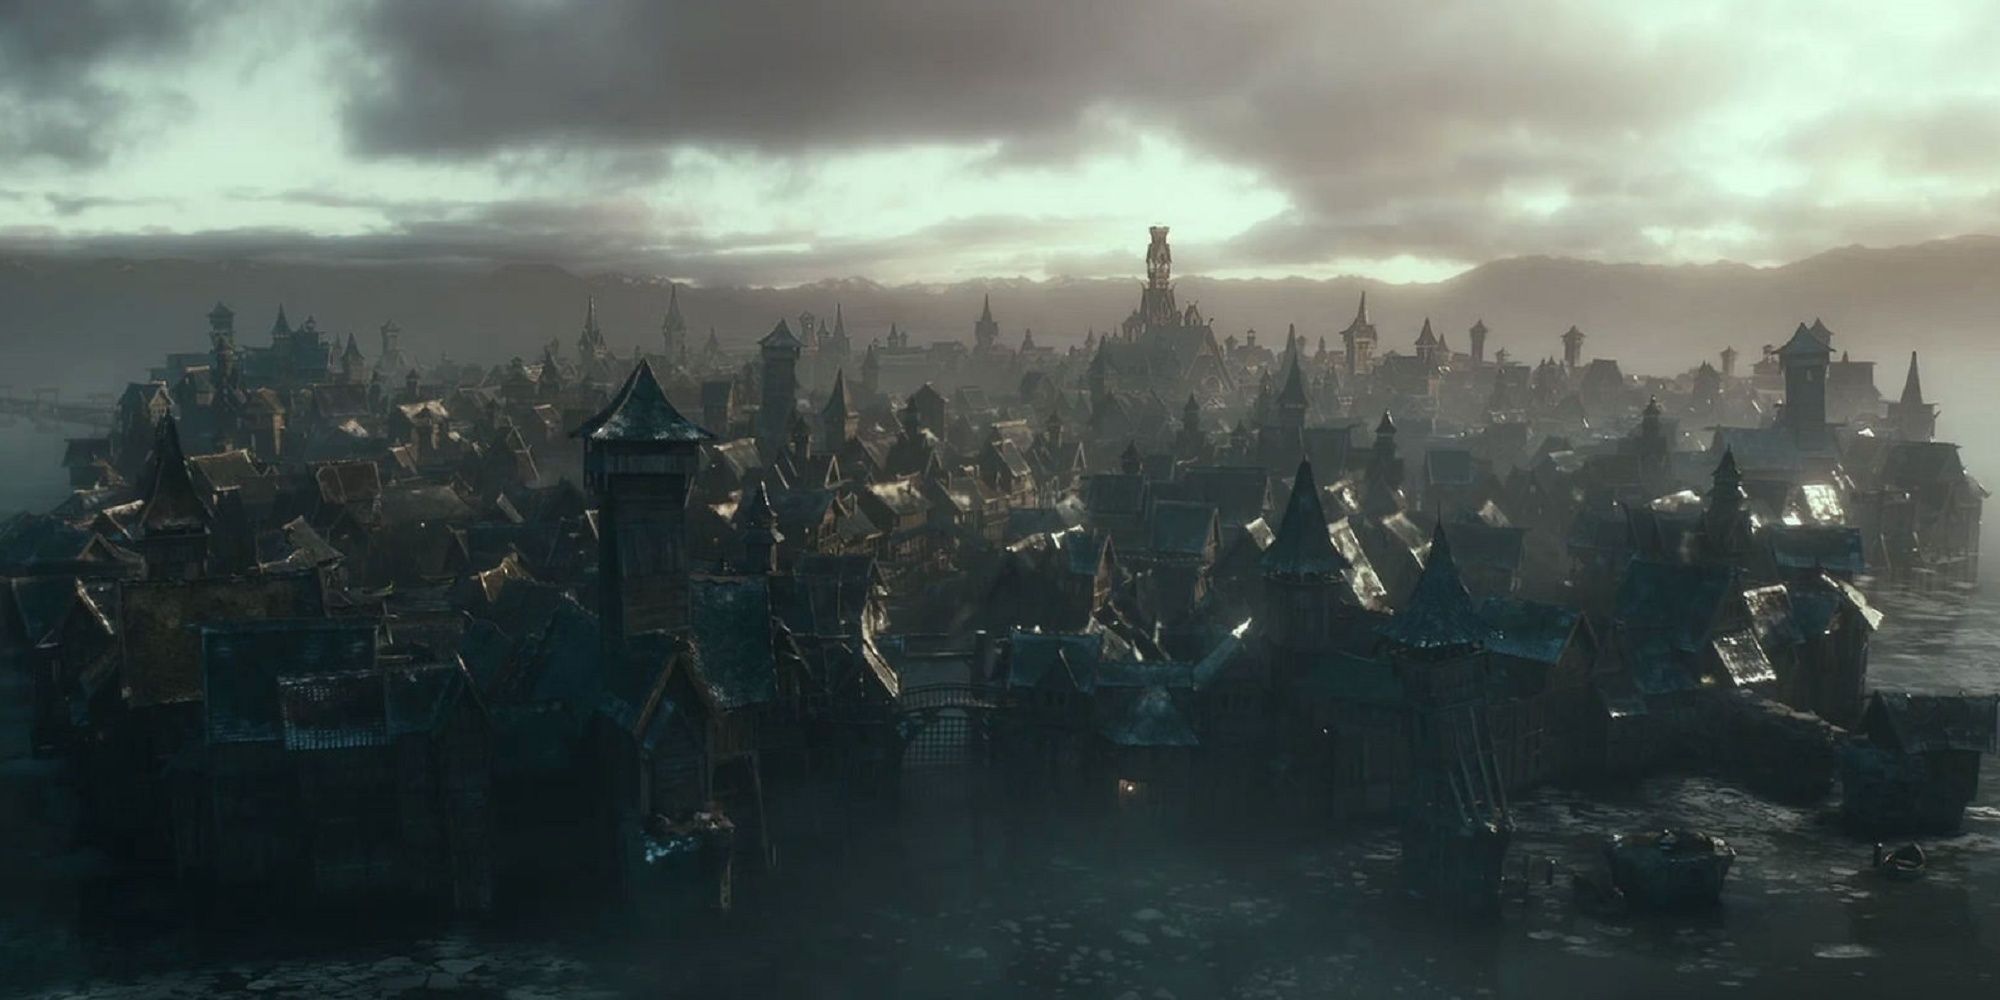 A screenshot of Laketown in The Hobbit movie